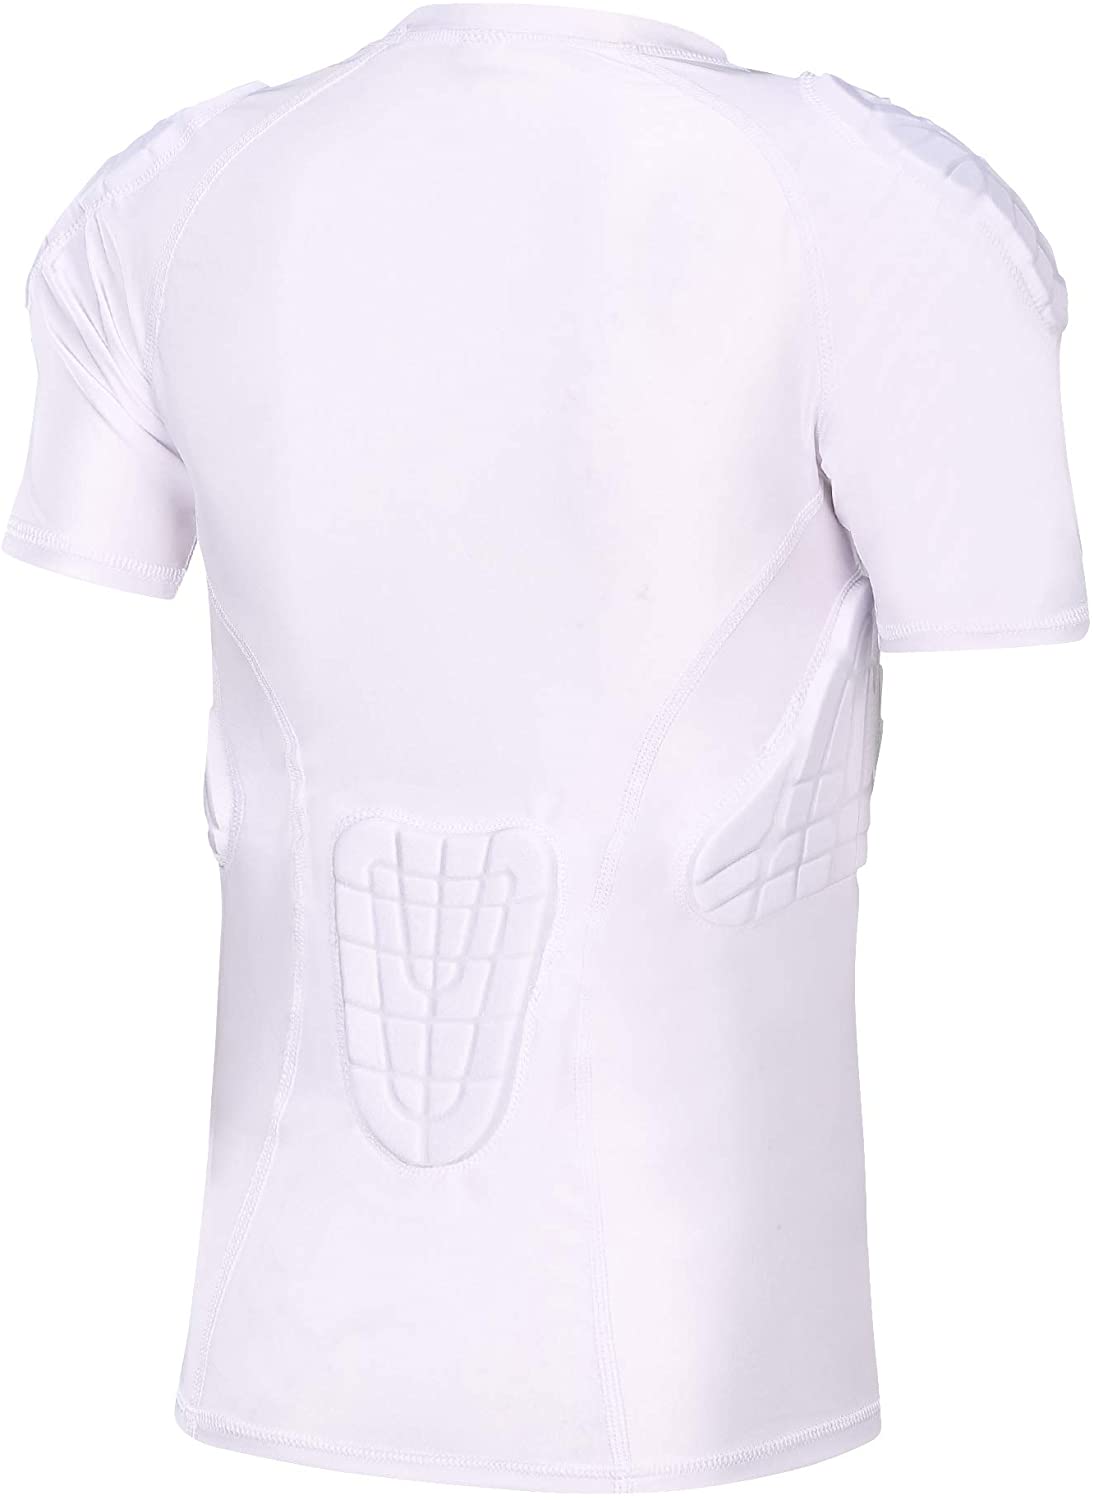 Kid's Padded Shirts Shorts 2pcs Set, Short Sleeve Compression Protective T  Shirt Padded Shorts Youth Protective Gear for Football MMA Baseball Hockey